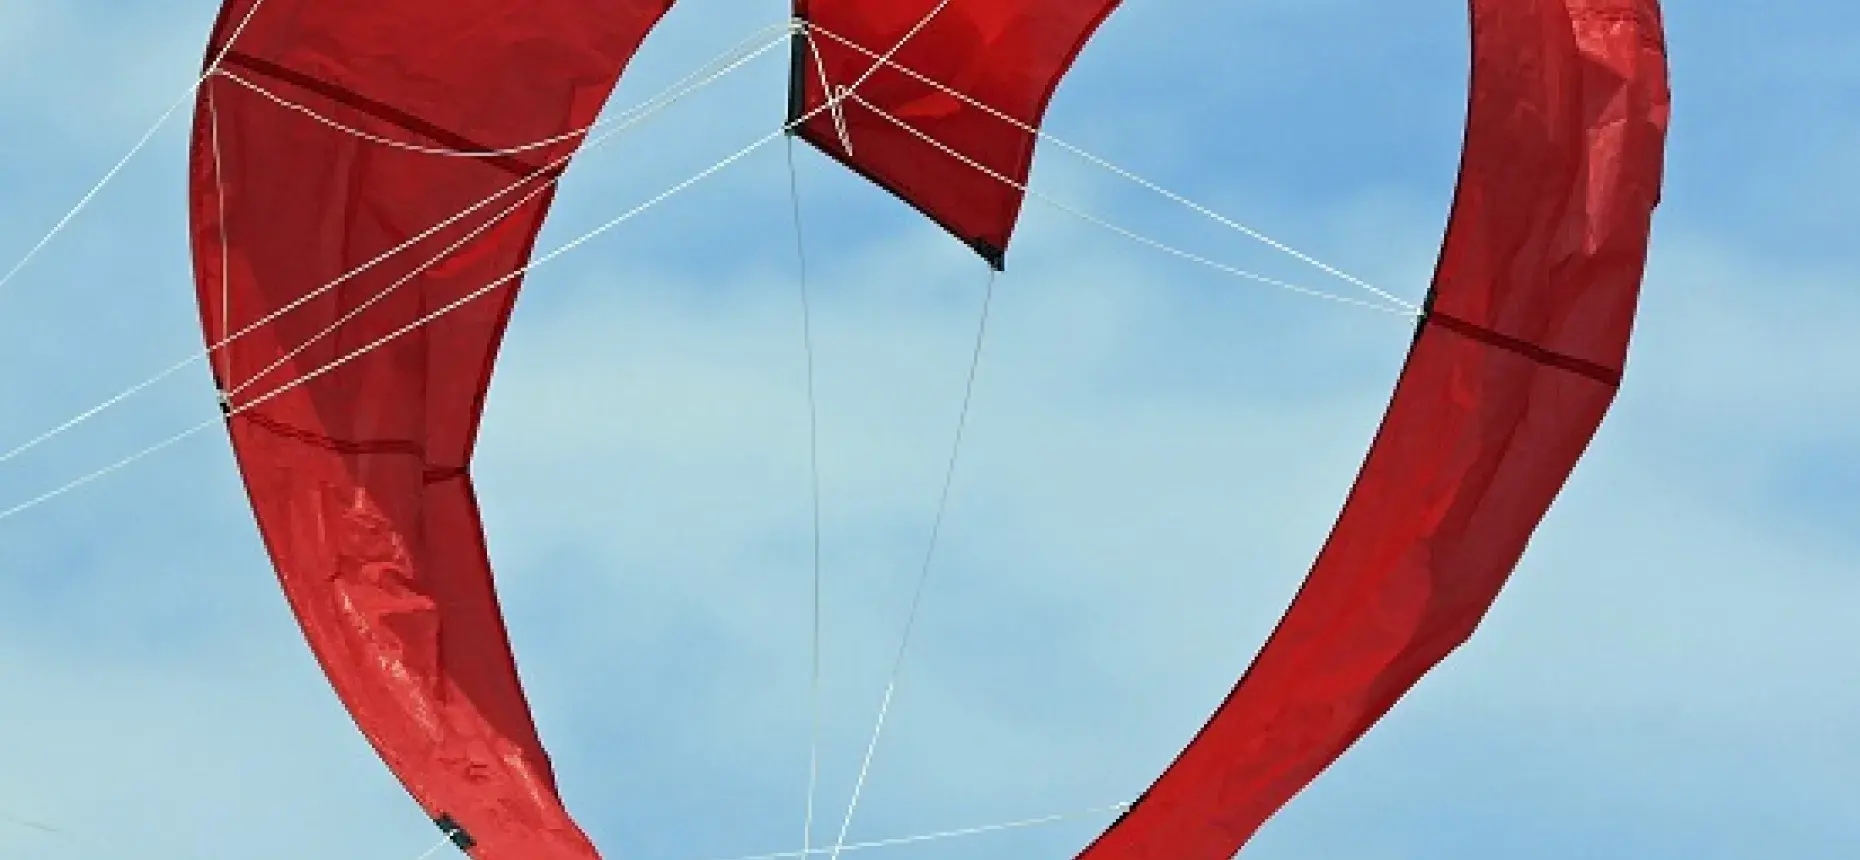 red kite in shape of love heart